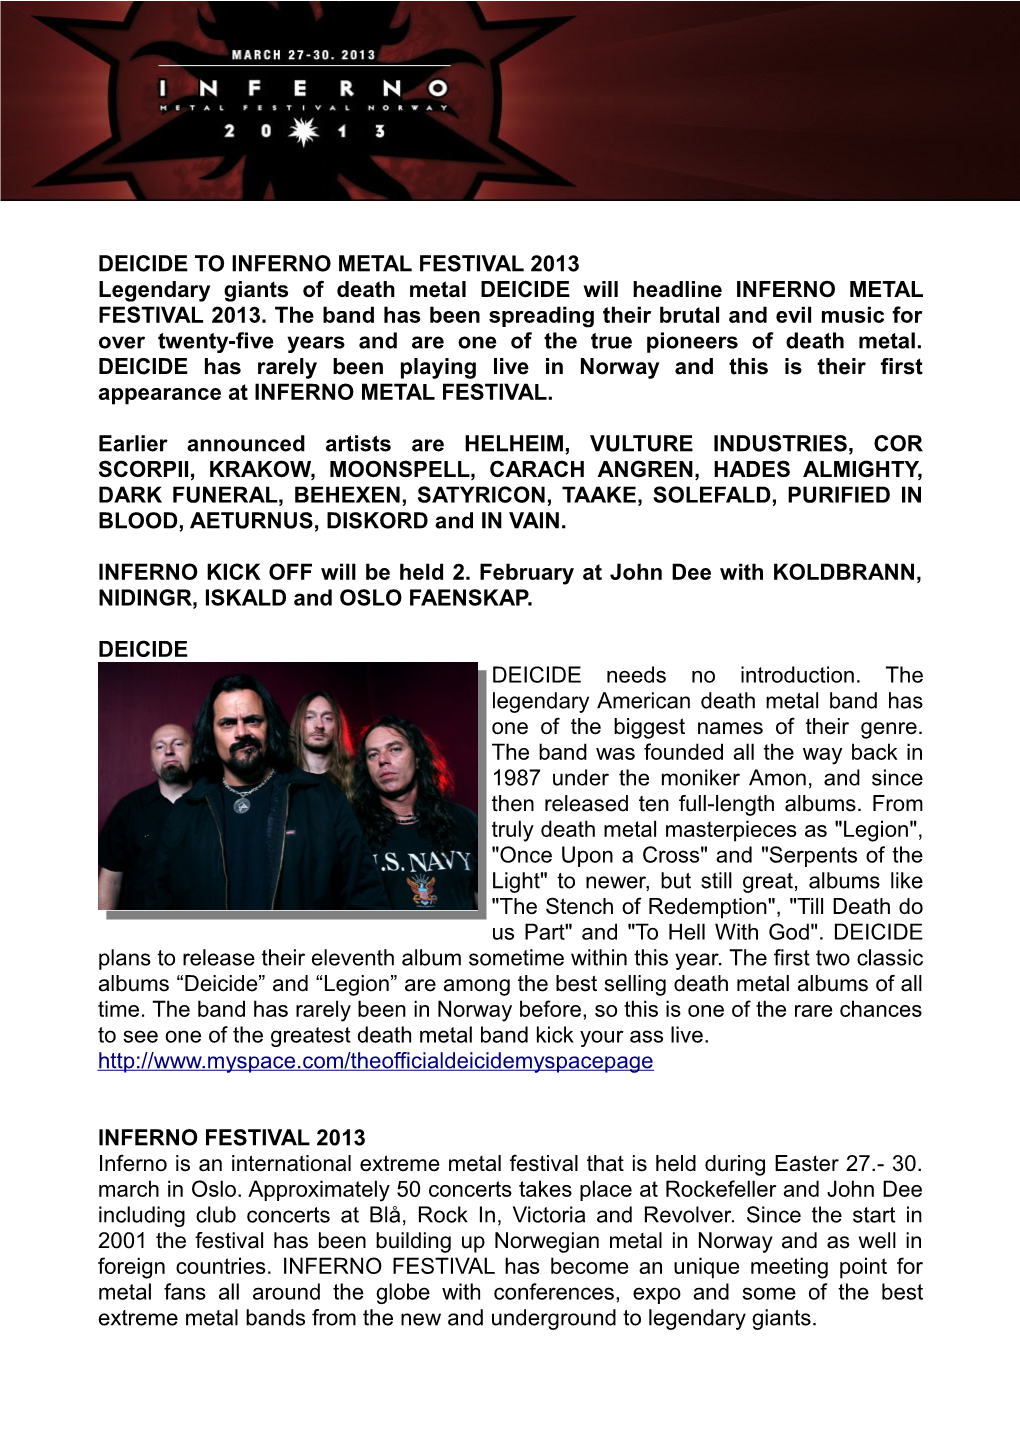 DEICIDE to INFERNO METAL FESTIVAL 2013 Legendary Giants of Death Metal DEICIDE Will Headline INFERNO METAL FESTIVAL 2013